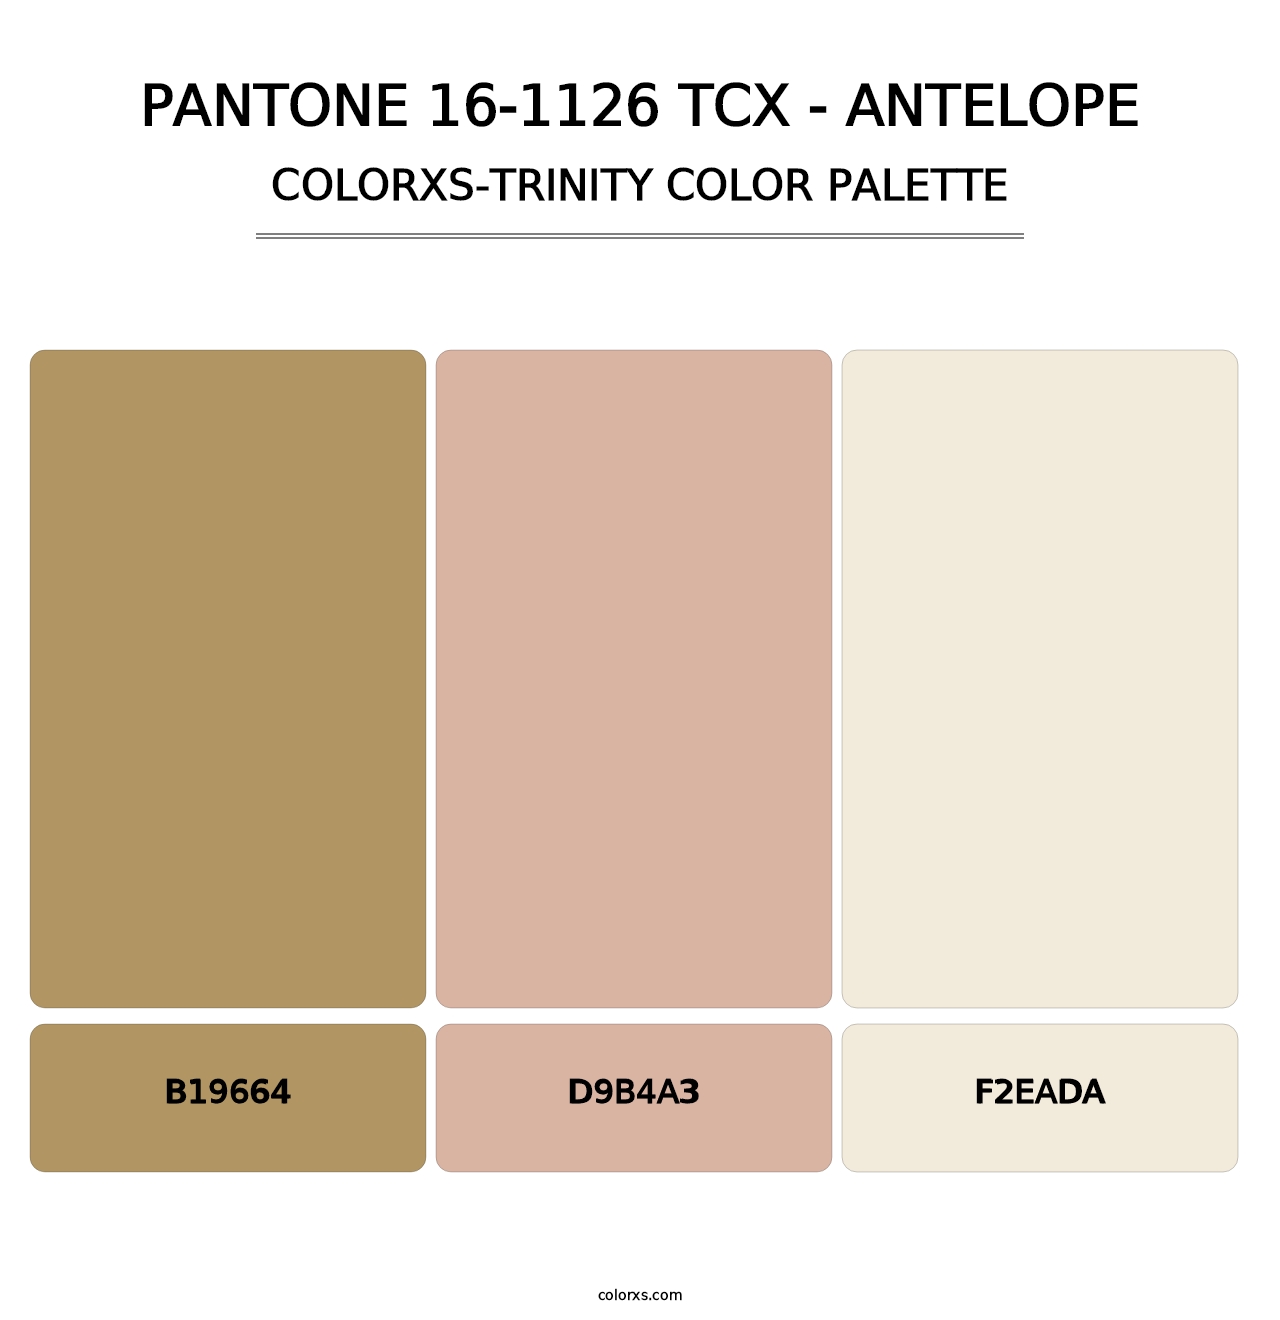 PANTONE 16-1126 TCX - Antelope - Colorxs Trinity Palette